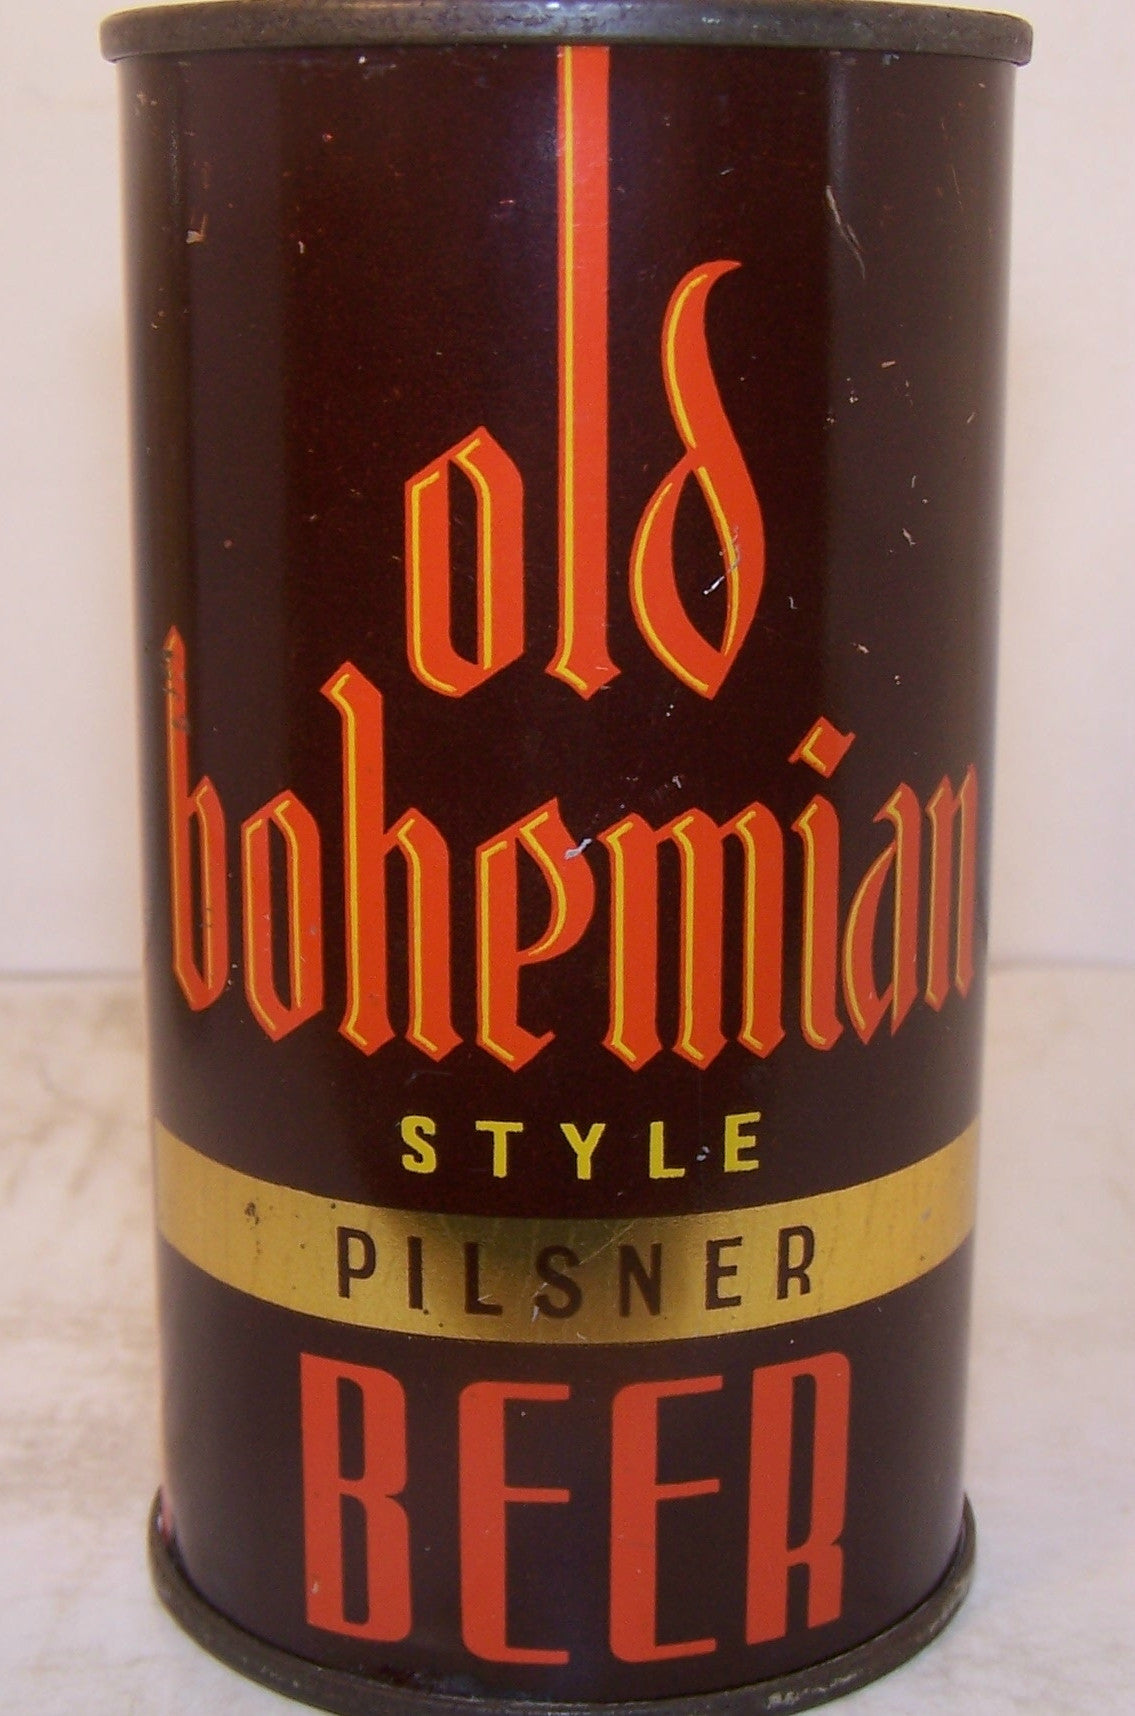 Old Bohemian Style Pilsner Beer, Lilek Page # 584, Grade 1- Sold 12/7/14